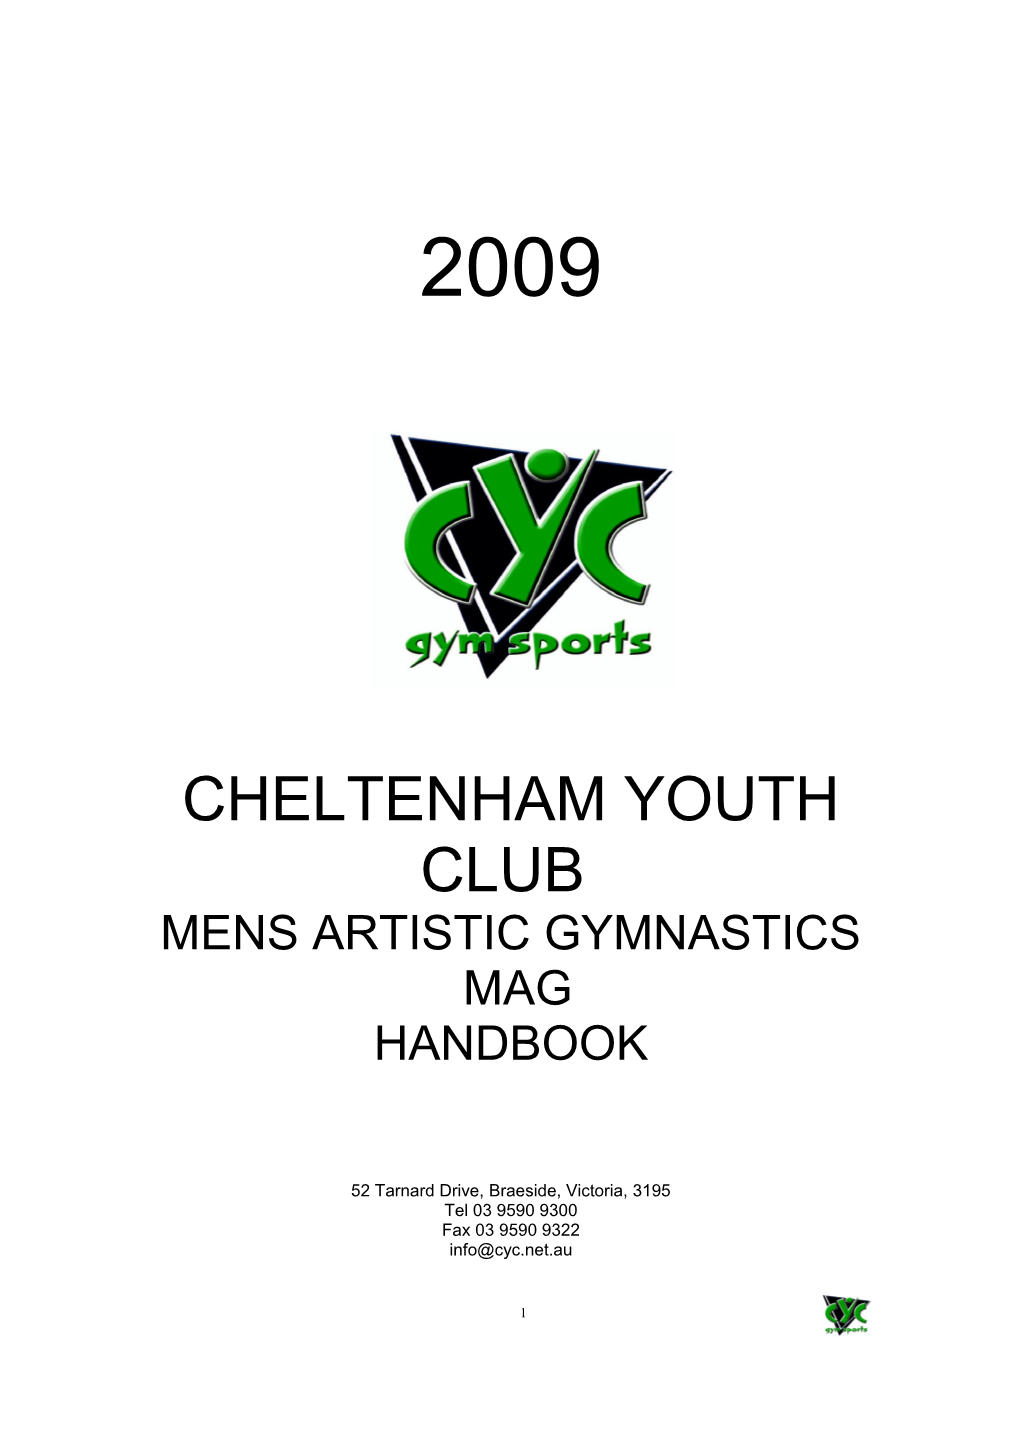 Cheltenham Youth Club